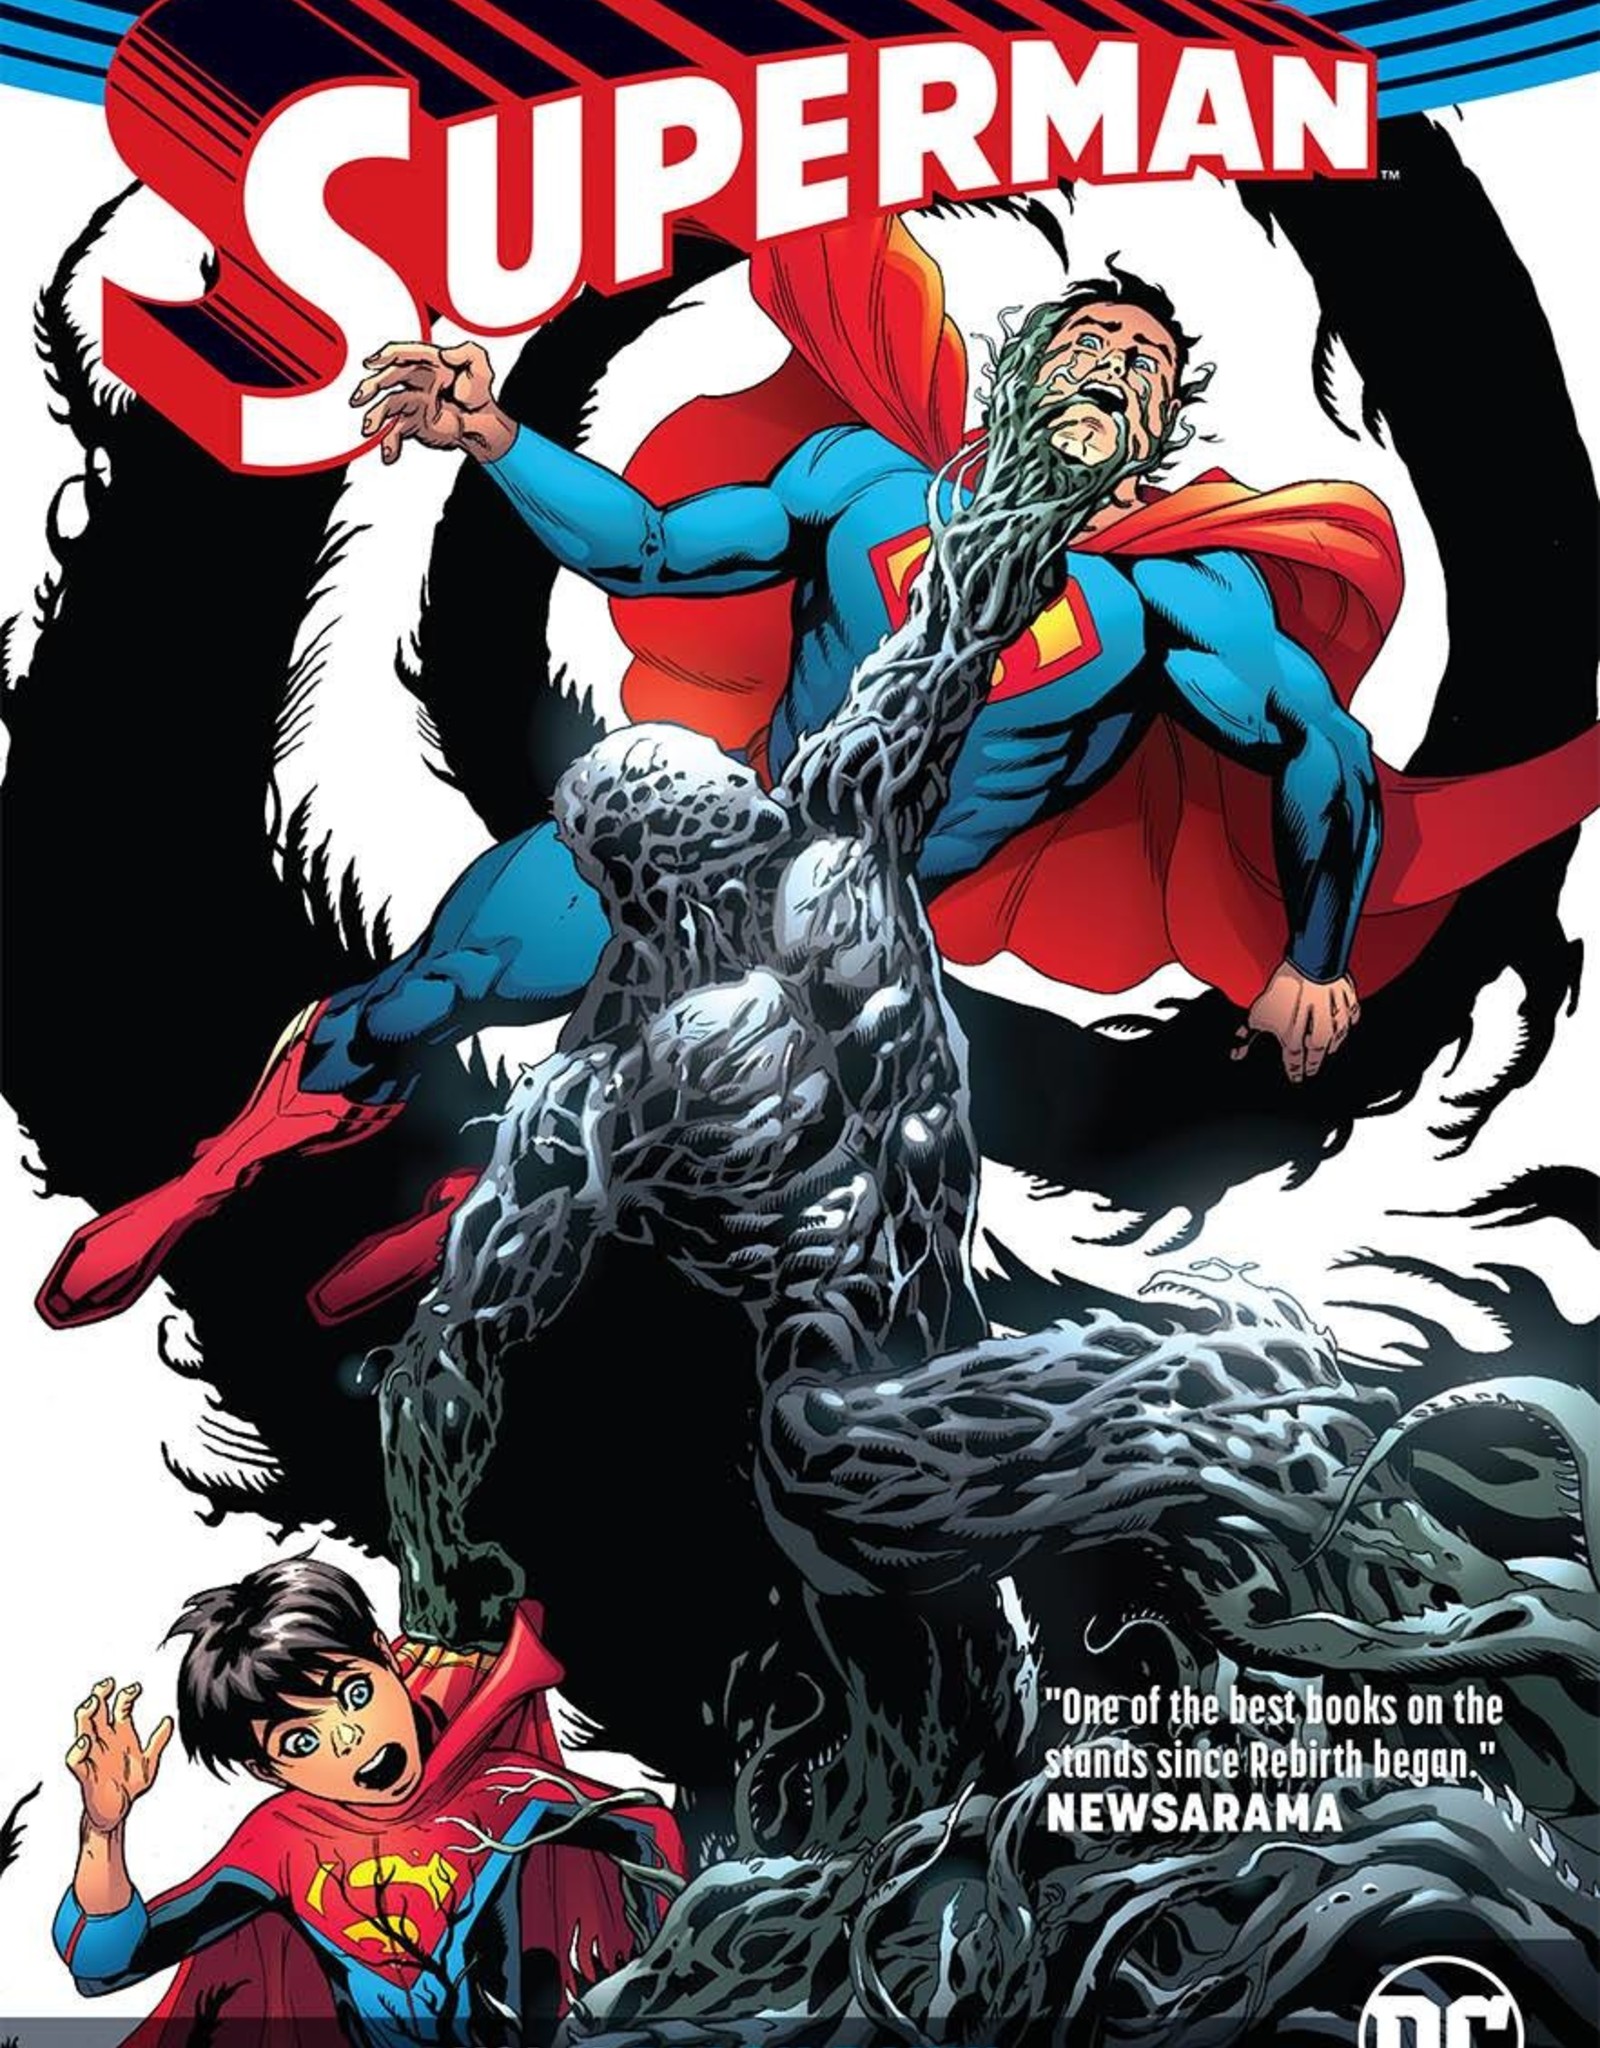 DC Comics Superman TP Volume 04 Black Dawn